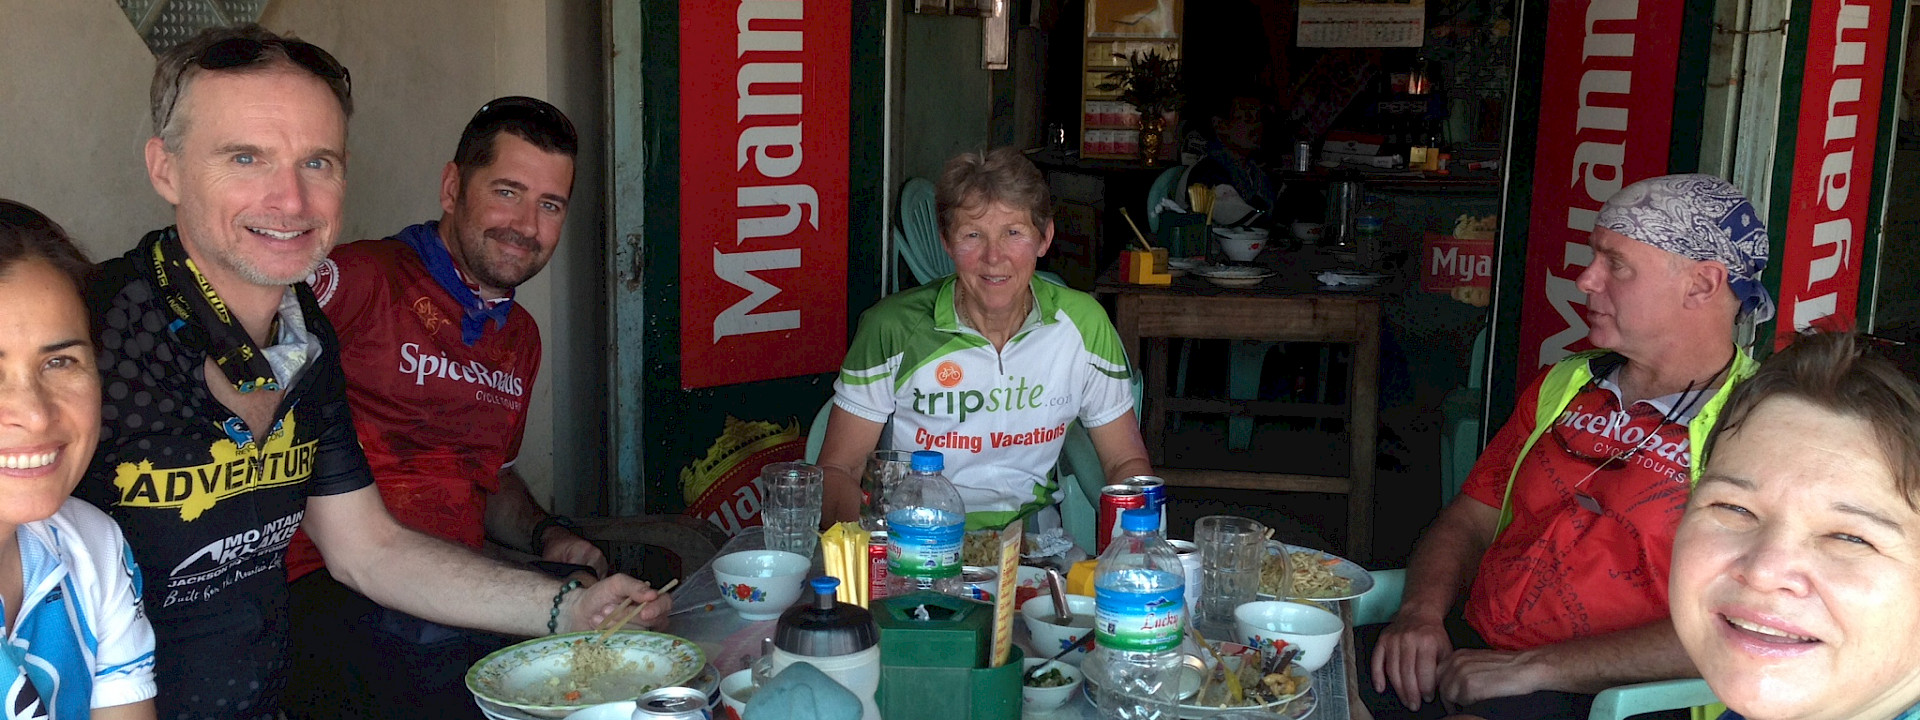 Our group on the Burma Bike Tour